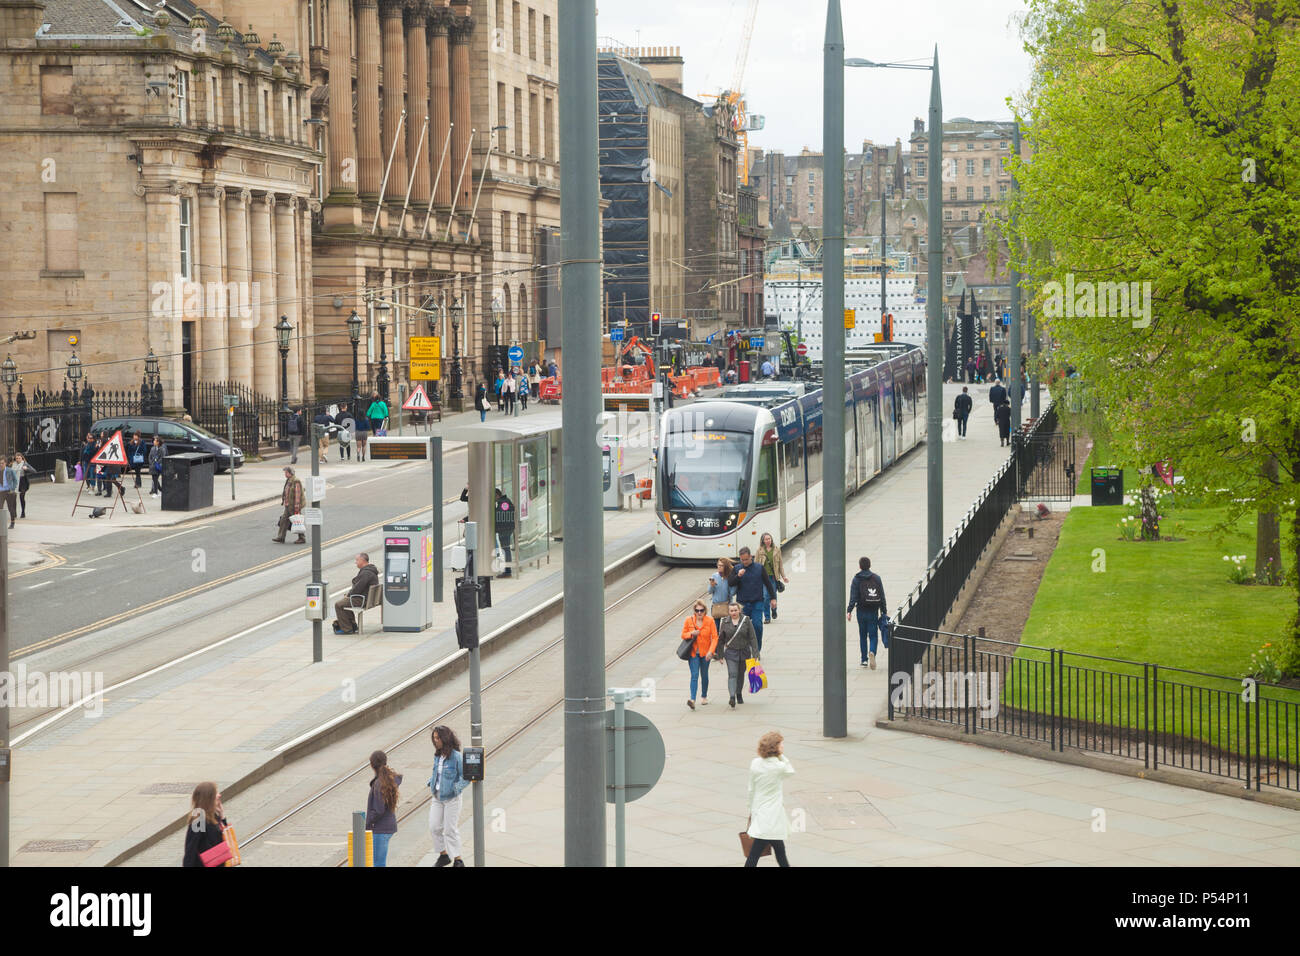 A tram in St Andrew Square Edinburgh Scotland. Stock Photo